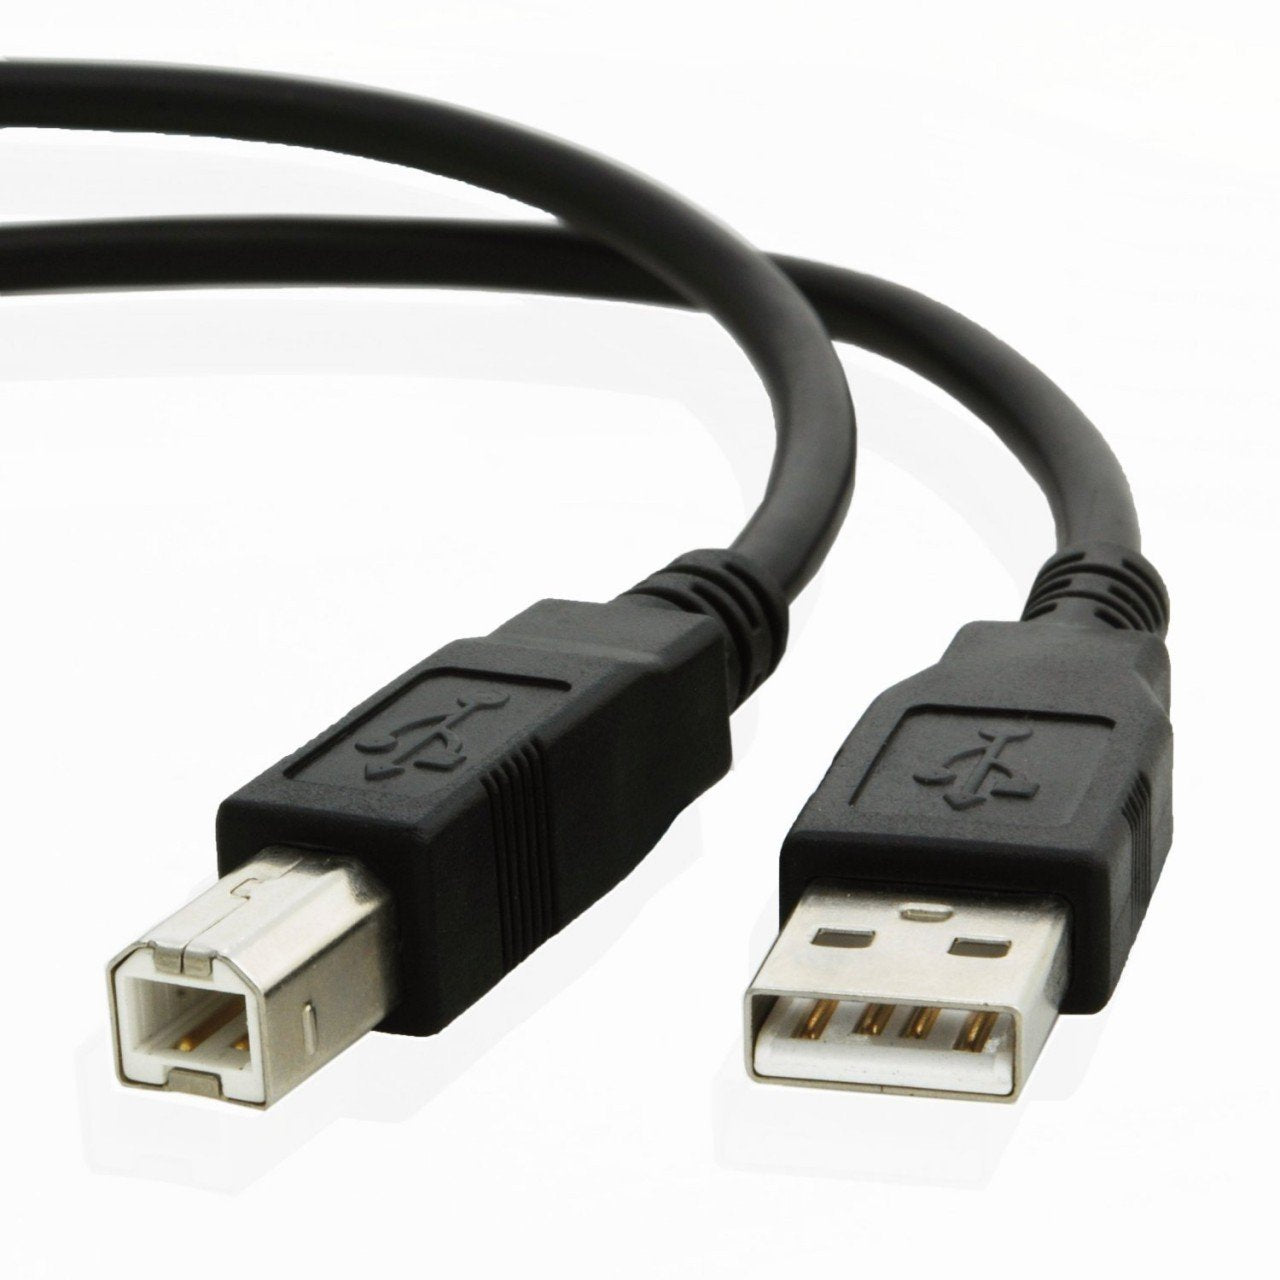 USB cable for Ifi Audio NANO iUSB3.0